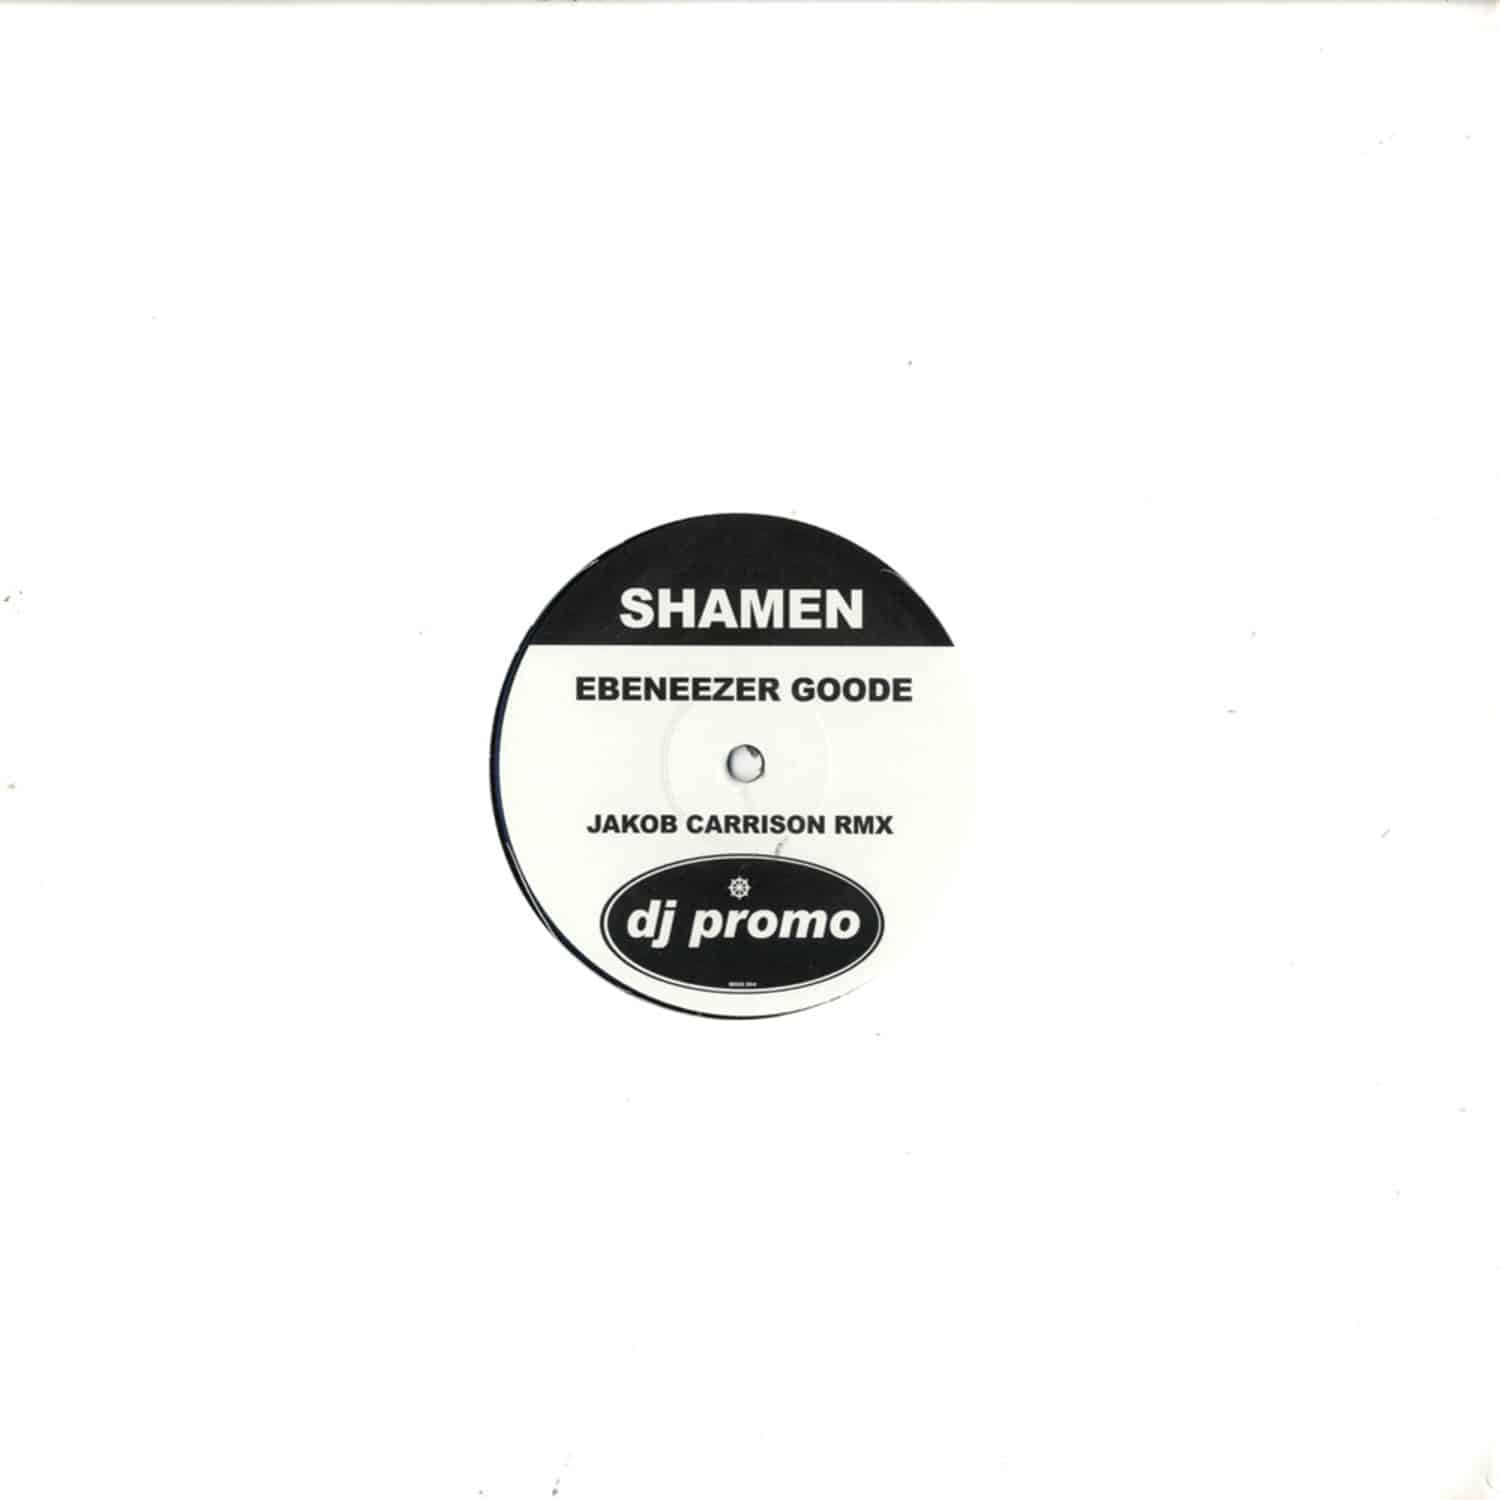 Shamen - EBENEEZER GOODE - JAKOB CARRISON RMX